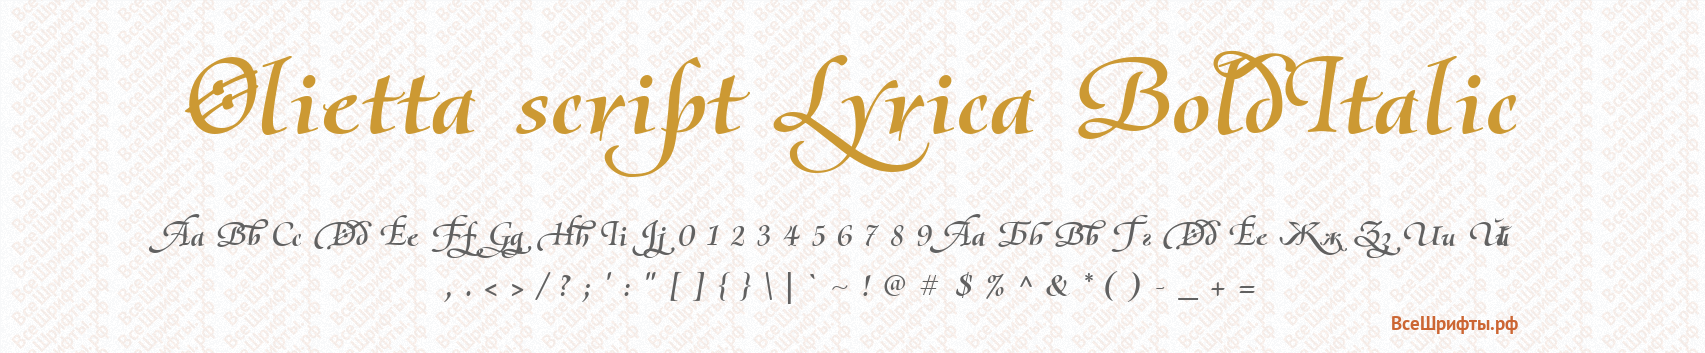 Шрифт Olietta script Lyrica BoldItalic